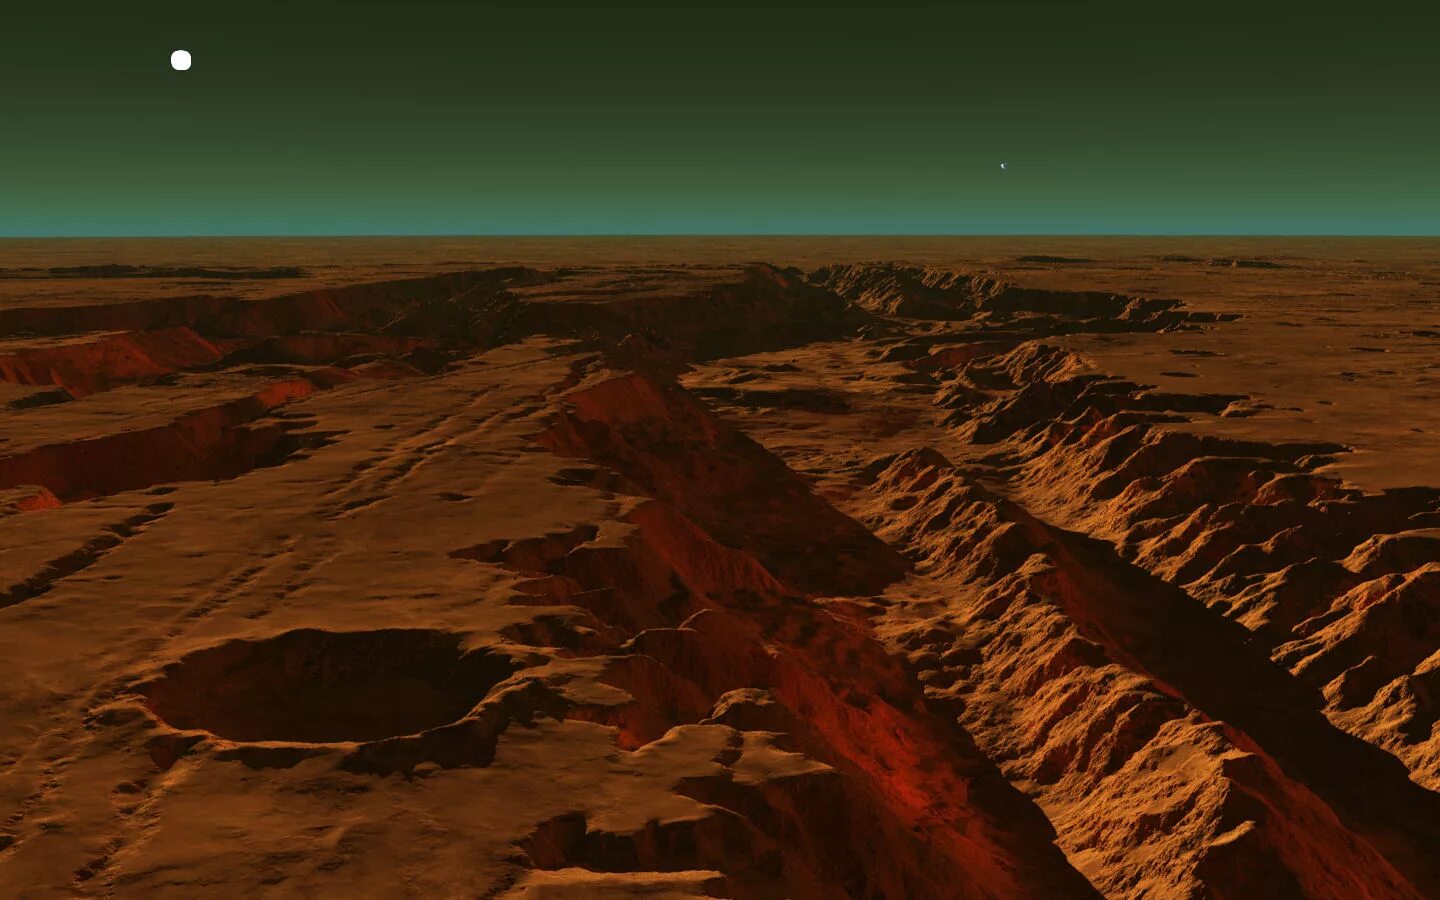 The other side of mars. Долина Маринер Марс. Марс Планета Долина Маринер. Долина Маринера на Марсе. Каньон на Марсе Долина Маринера.